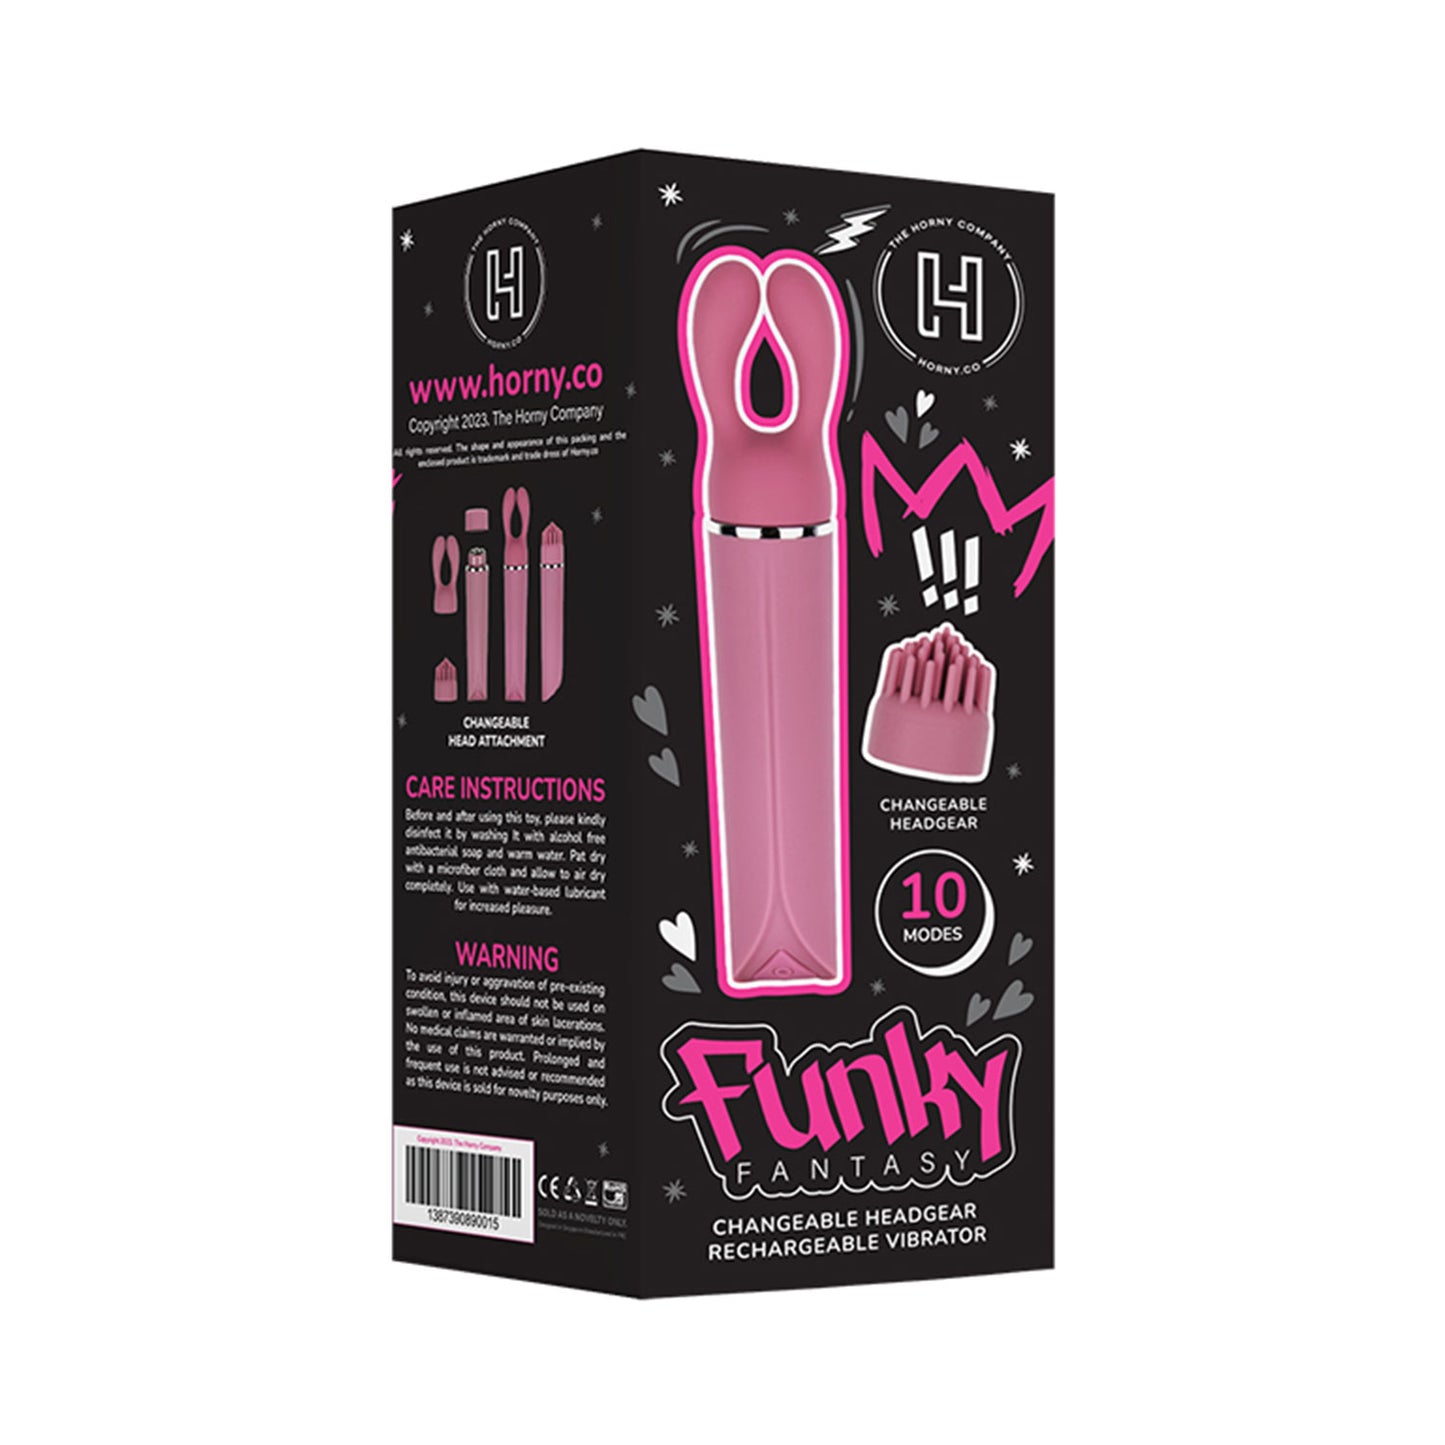 The Horny Company - Funky Fantasy Changeable Headgear Magic Wand Rechargeable Vibrator